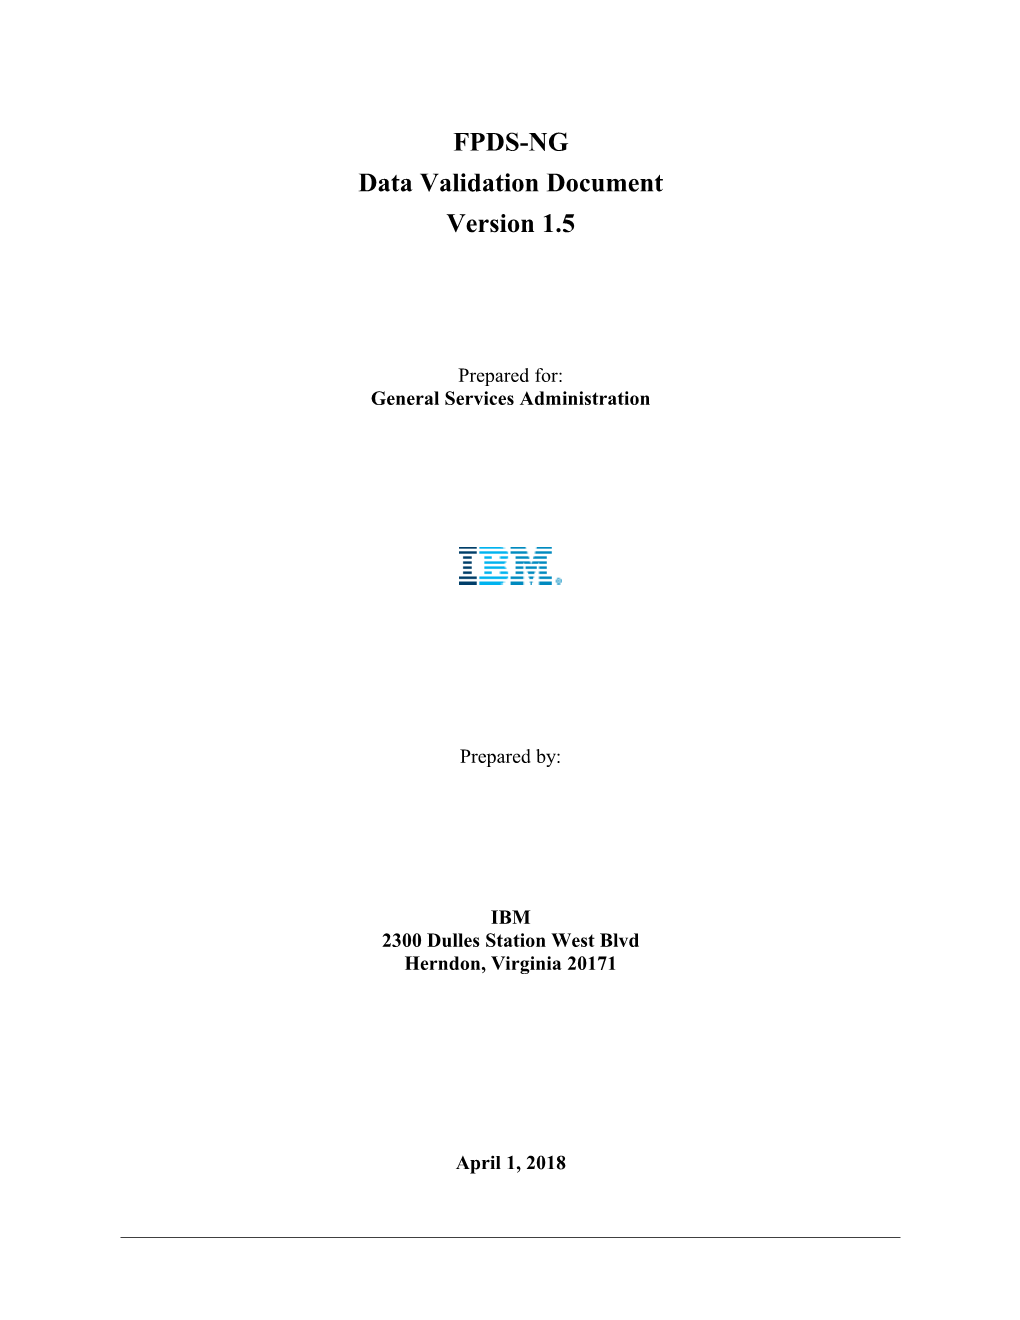 Data Validation Document s1